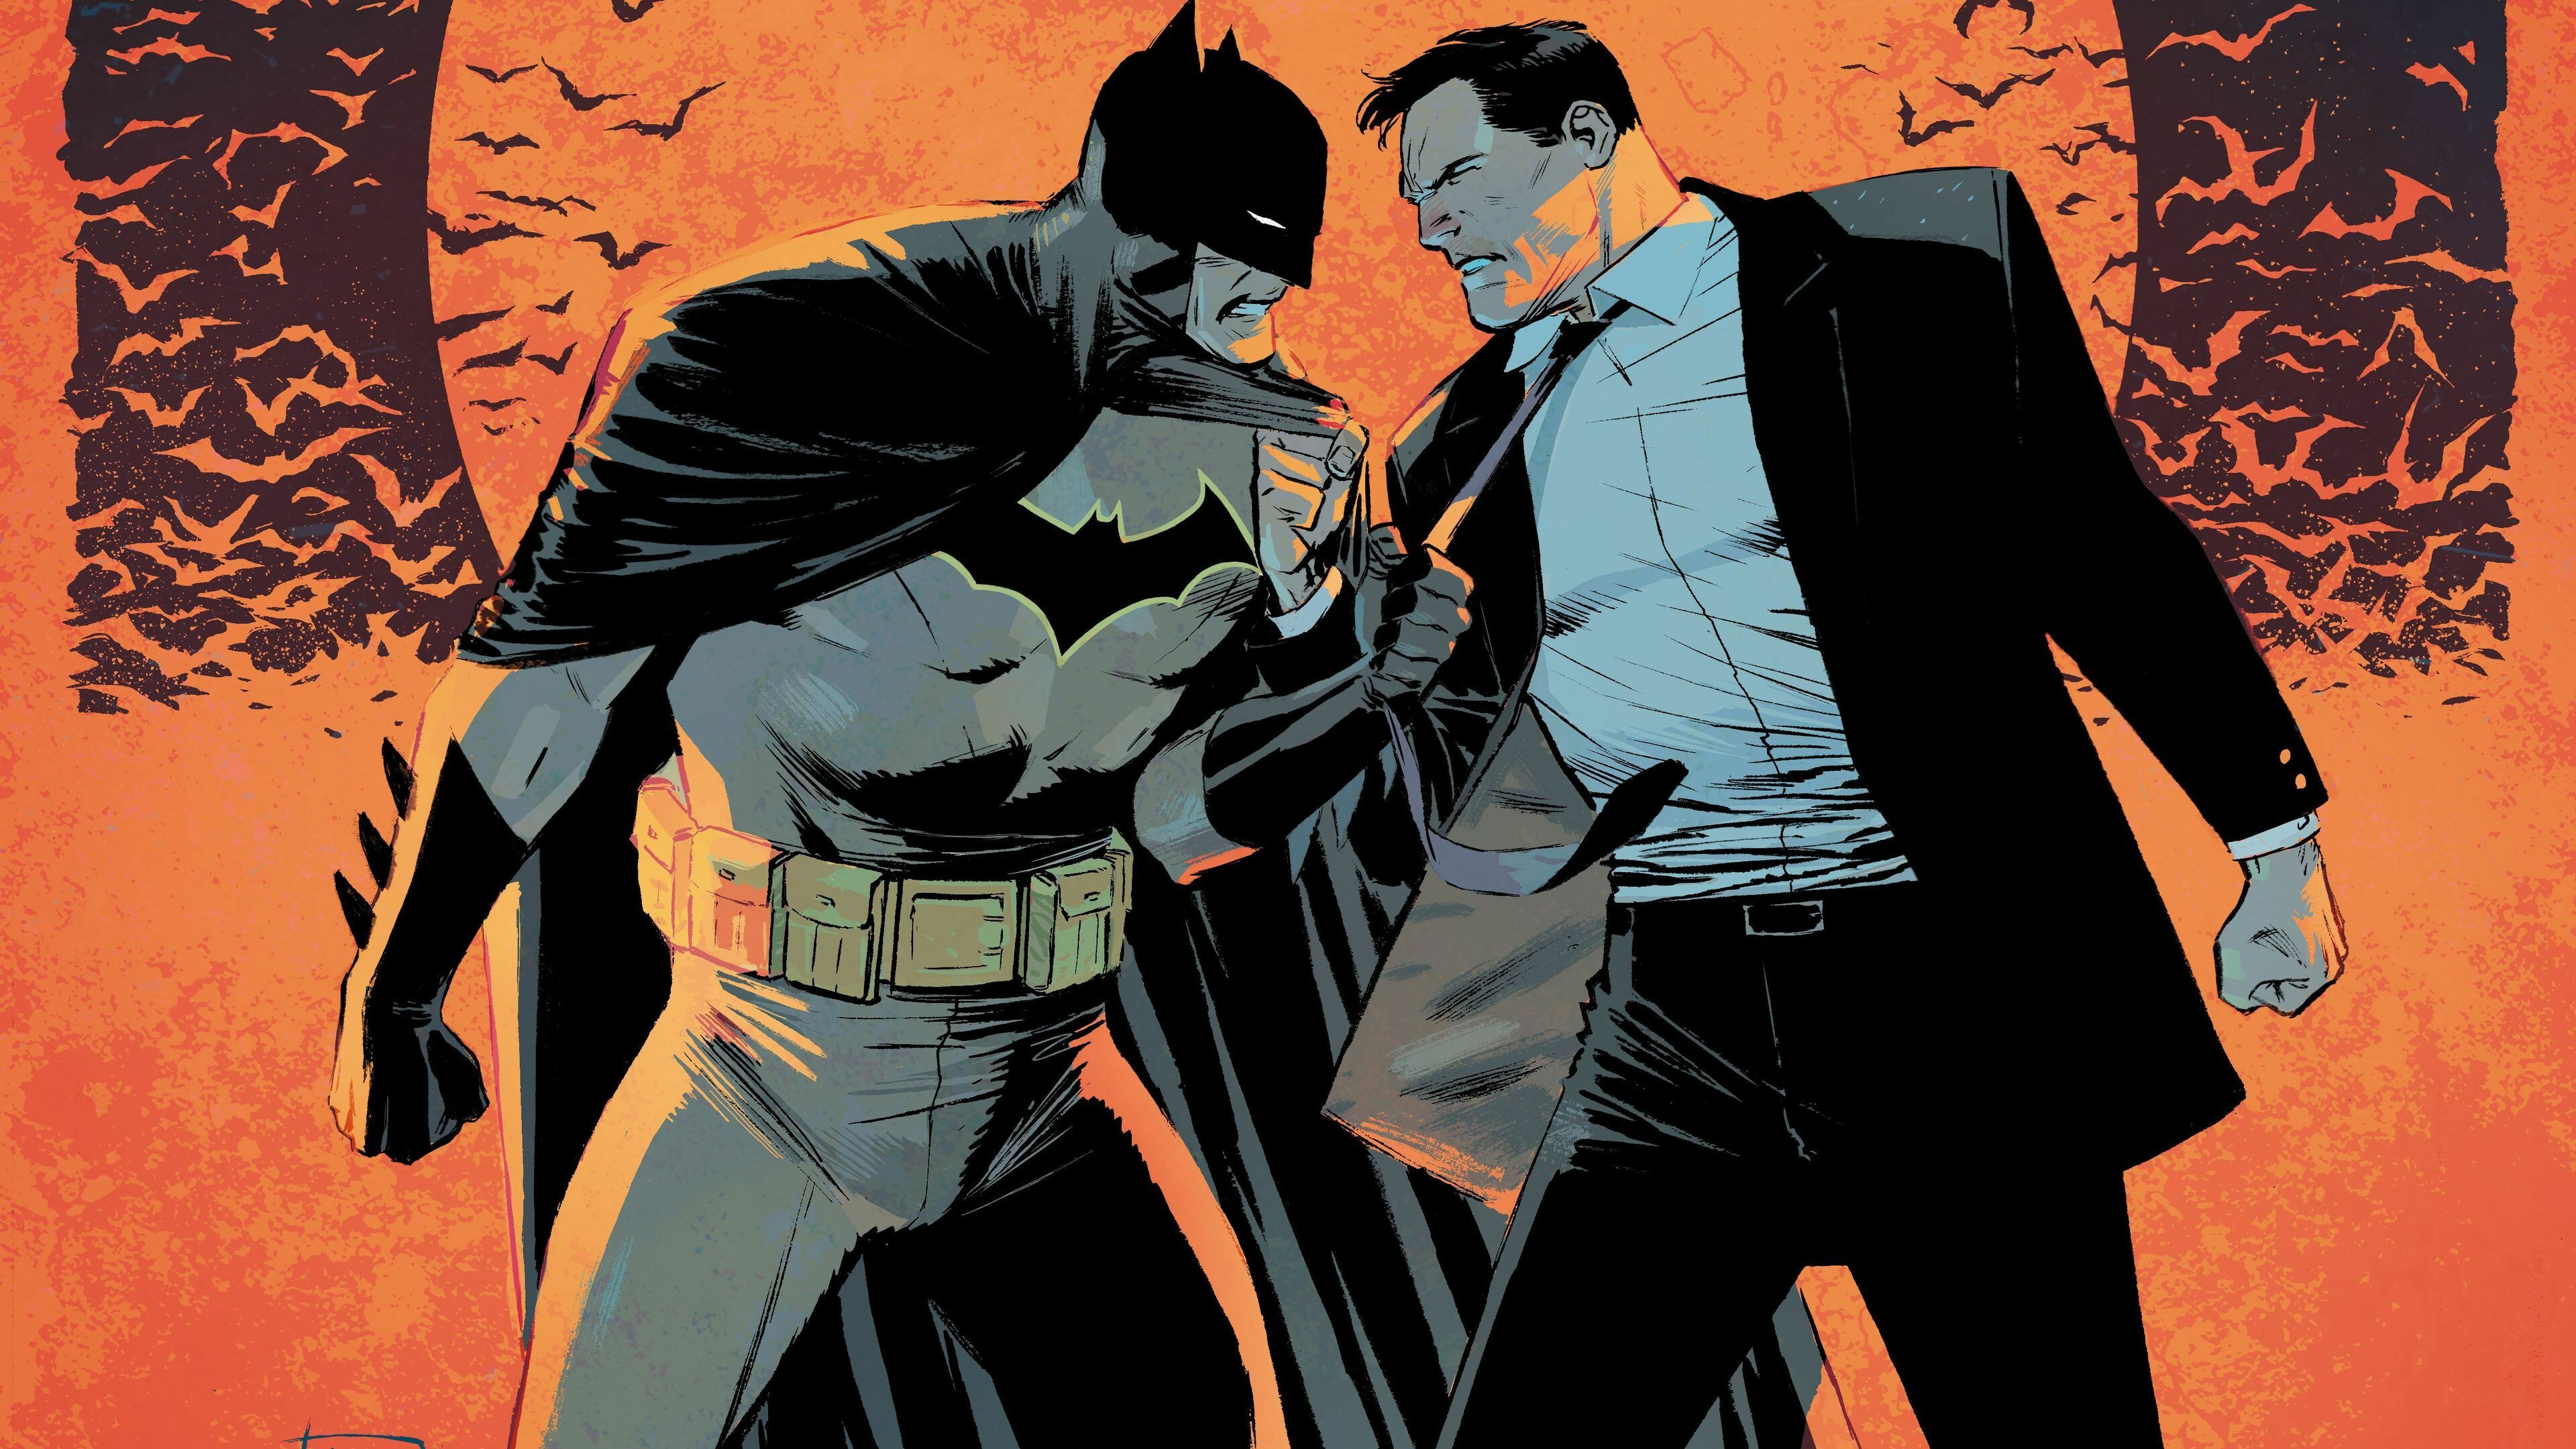 DC: Bruce Wayne / Batman, a wealthy socialite, and the owner of Wayne Enterprises. 3840x2160 4K Wallpaper.